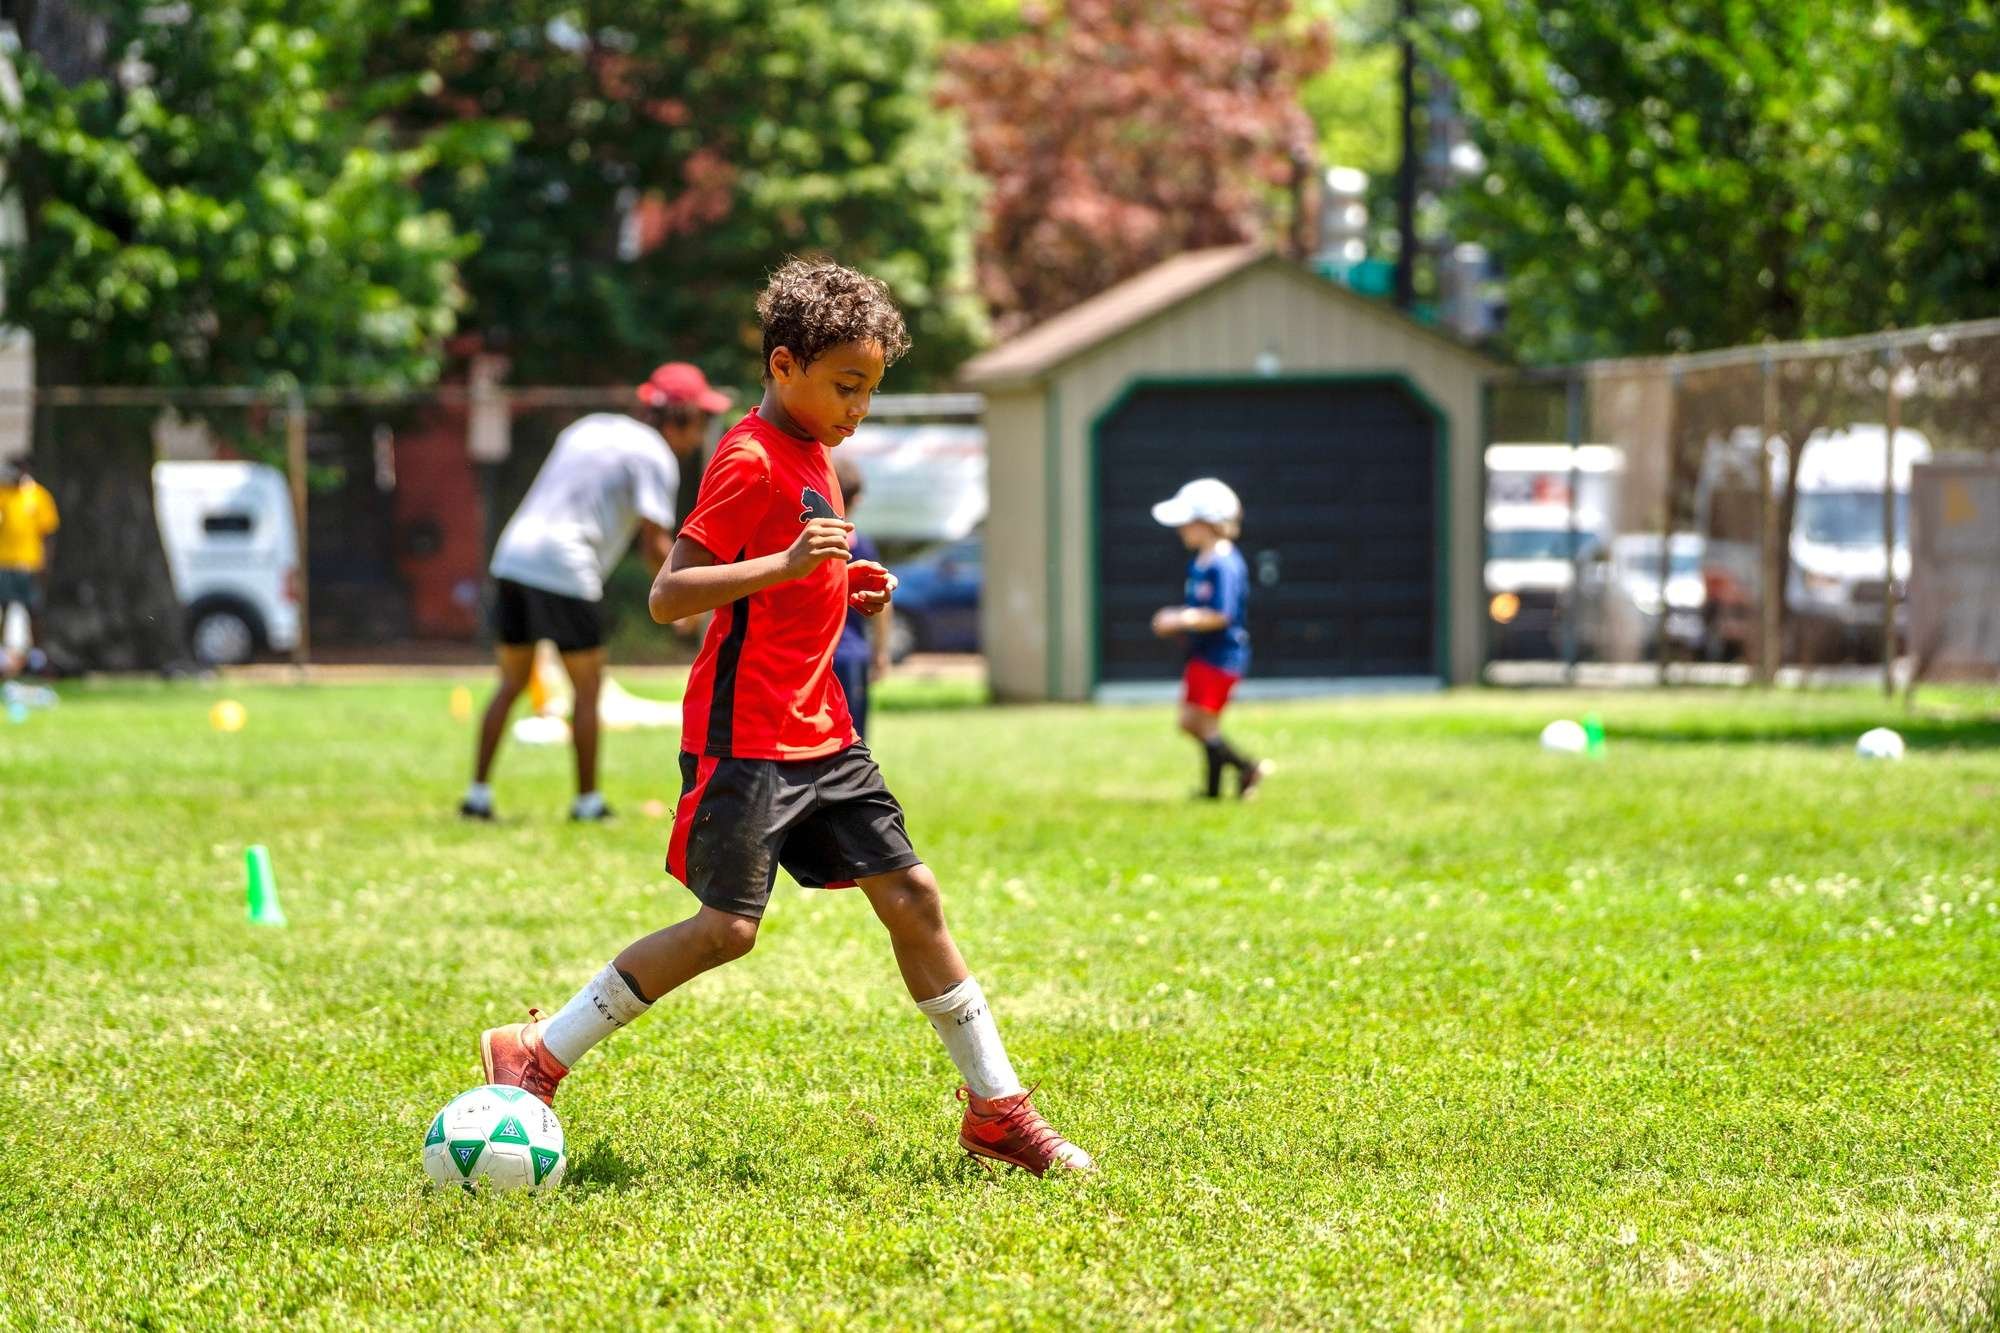 Dc-way-soccer-club-for-kids-in-washington-dc-summer-camp-at-tyler-elementary-school- 0134.jpg